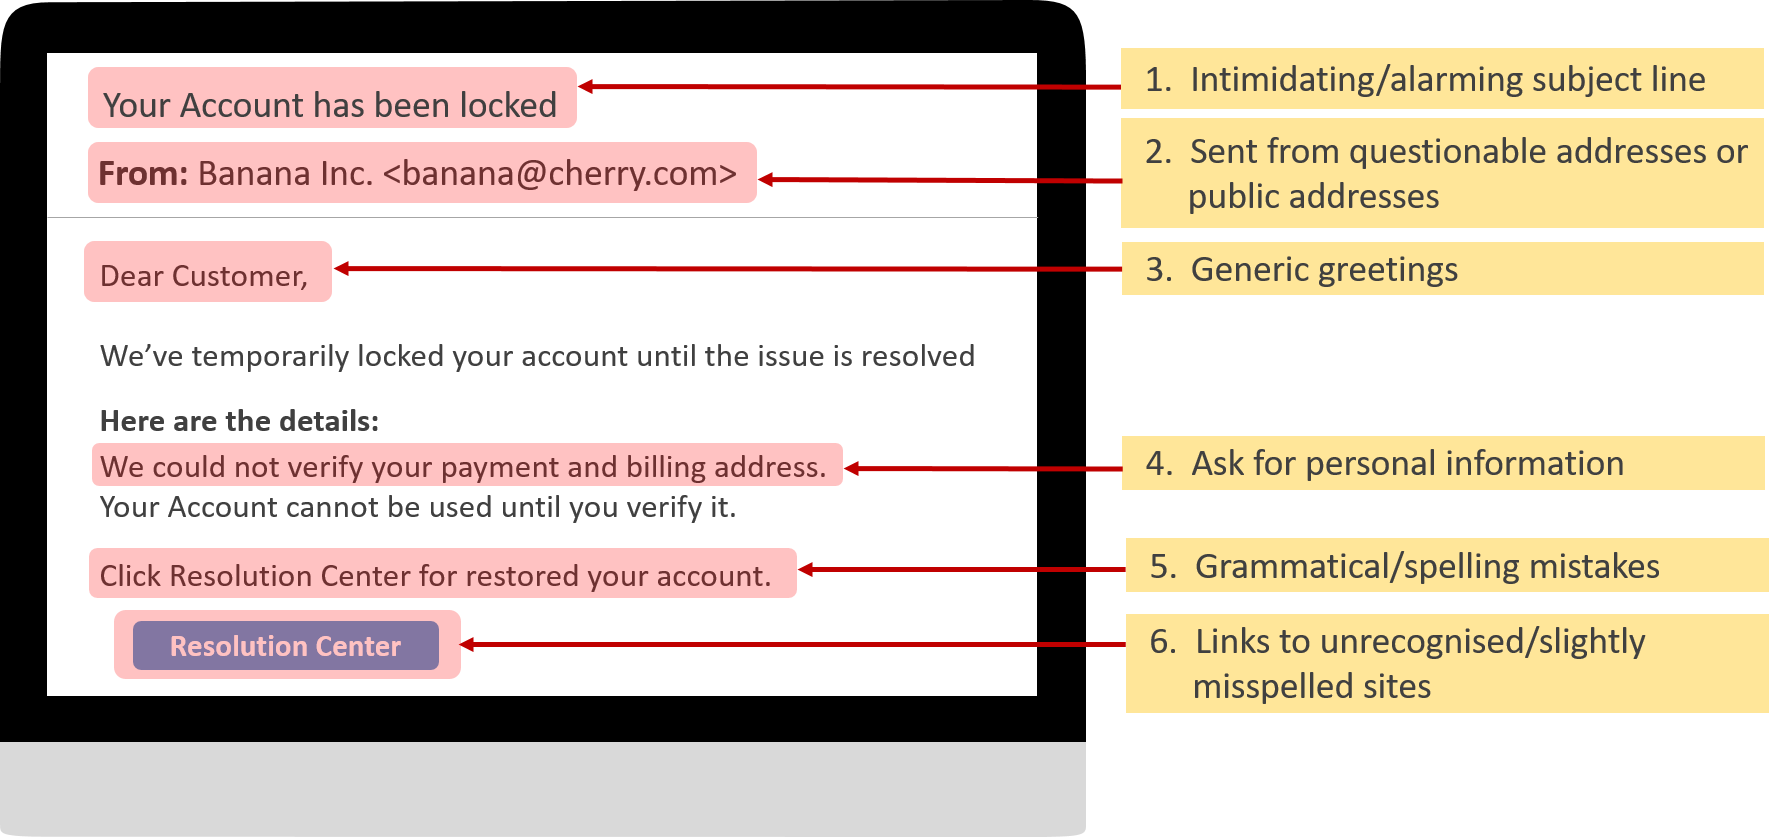 Common characteristics of phishing emails